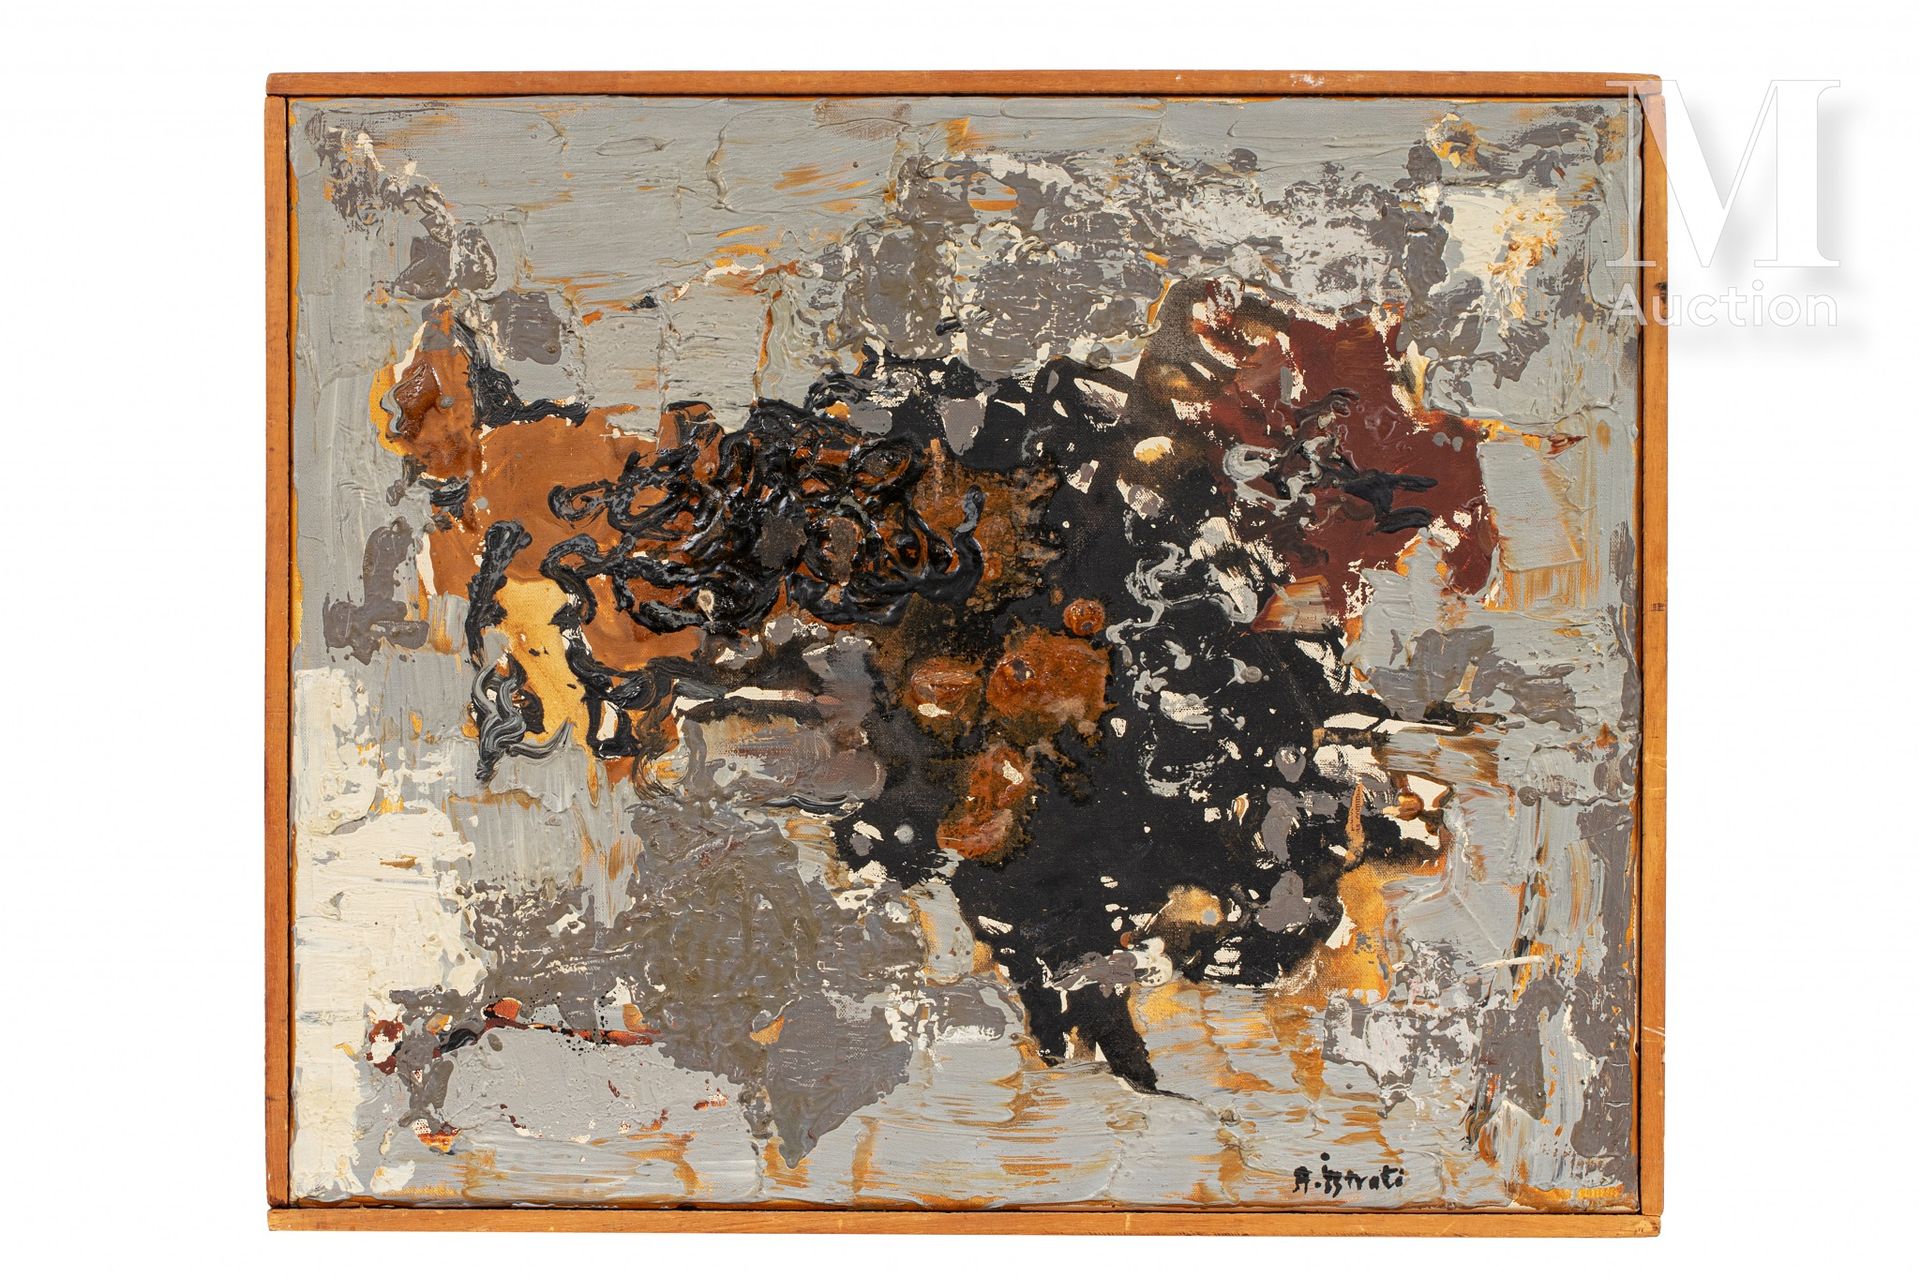 Alexandre ISTRATI (1915-1991) 无题

布面油画，右下方有签名，背面有会签

38 x 46 厘米



出处 :

私人收藏，巴黎